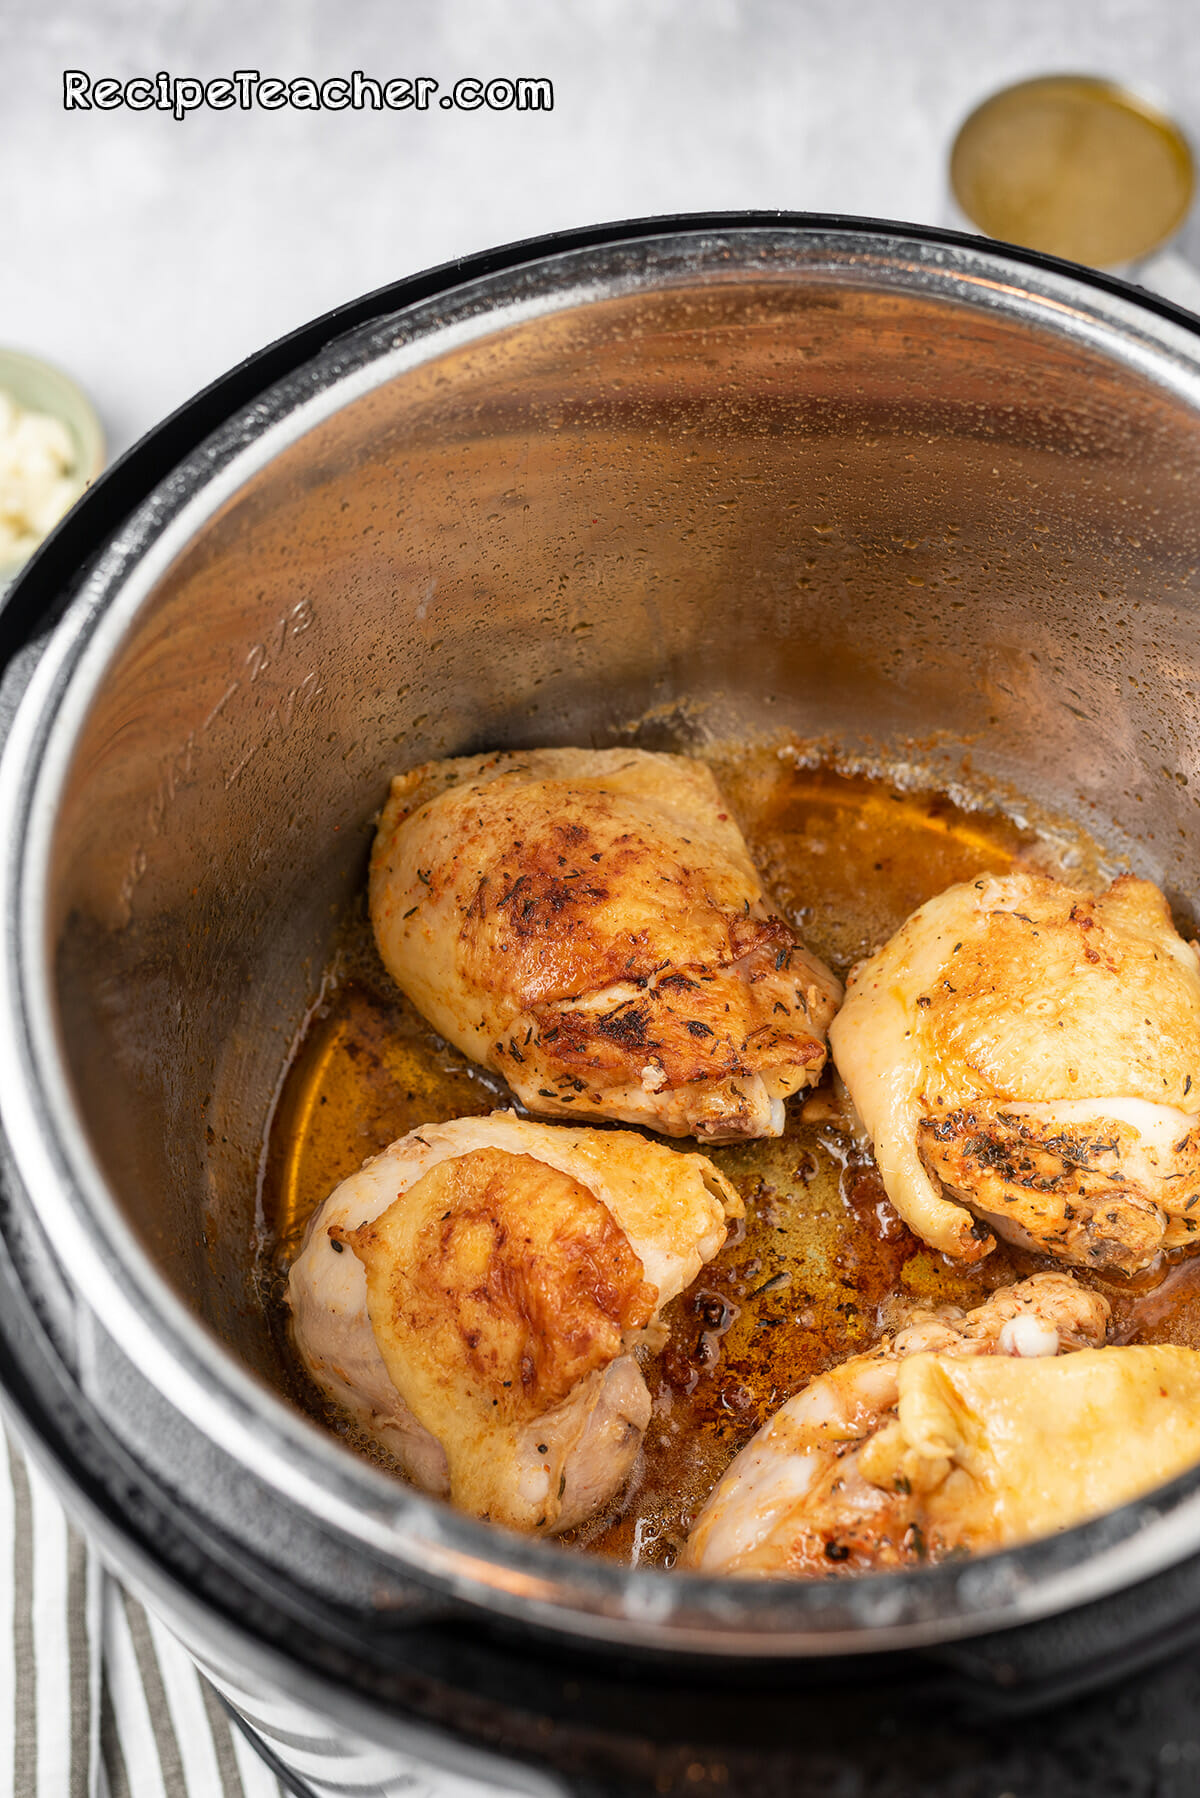 Recipe for Instant Pot creamy garlic chicken